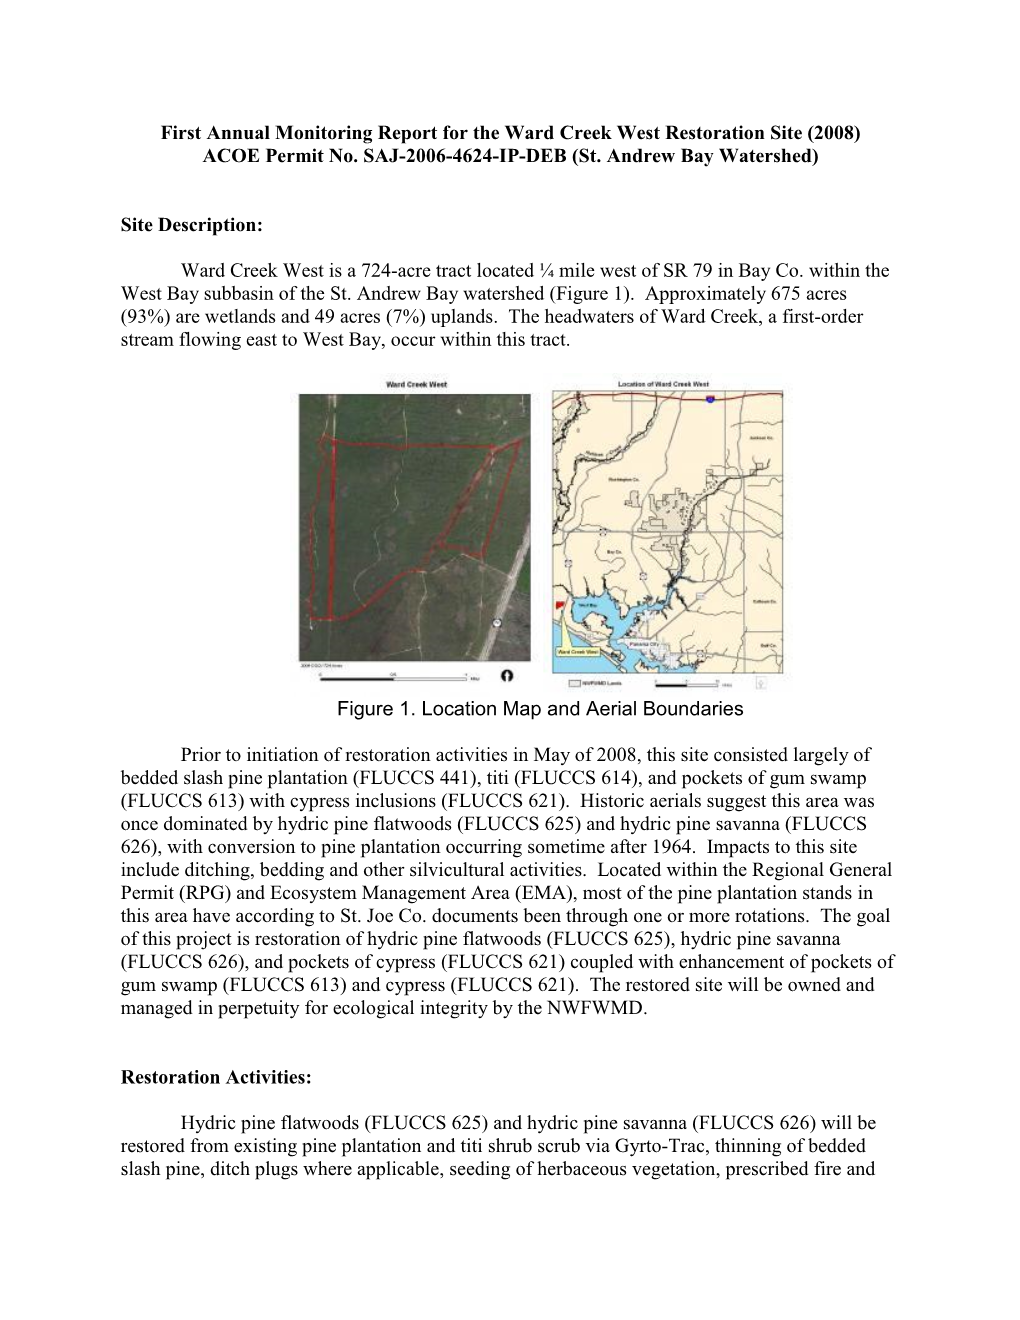 2008 Ward Creek West Monitoring Report